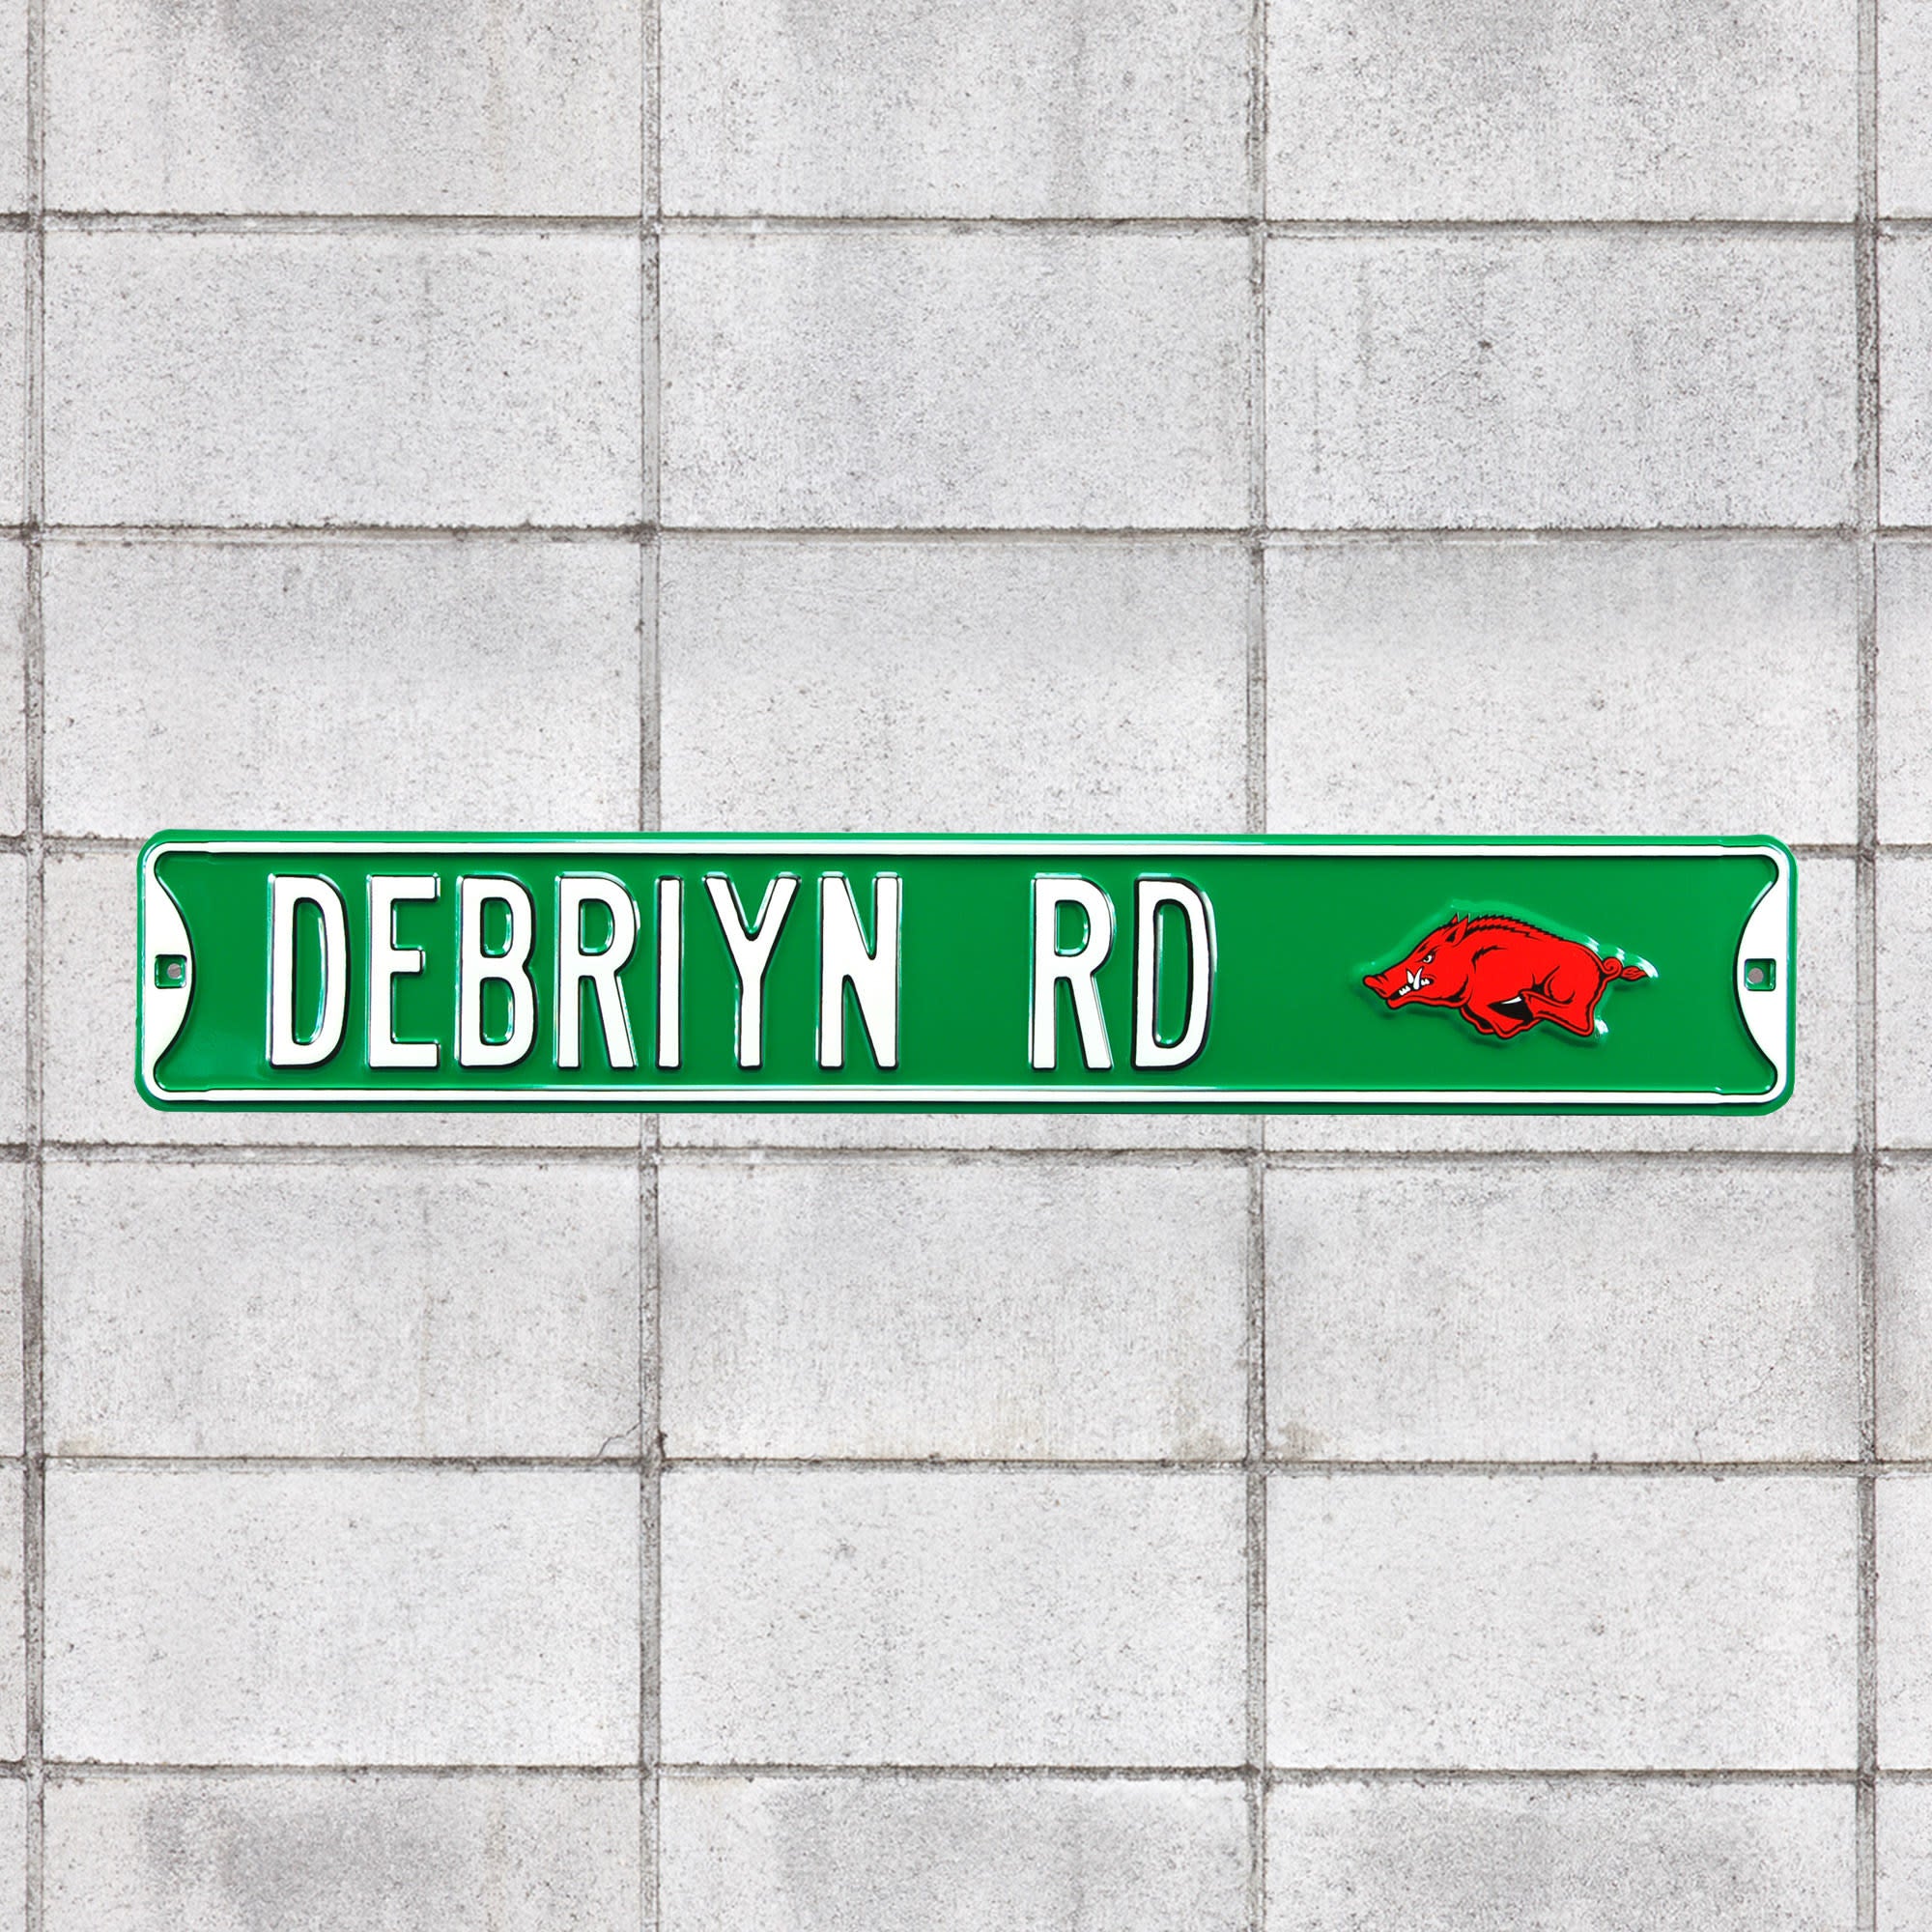 Arkansas Razorbacks: Debriyn Rd - Officially Licensed Metal Street Sign 36.0"W x 6.0"H by Fathead | 100% Steel